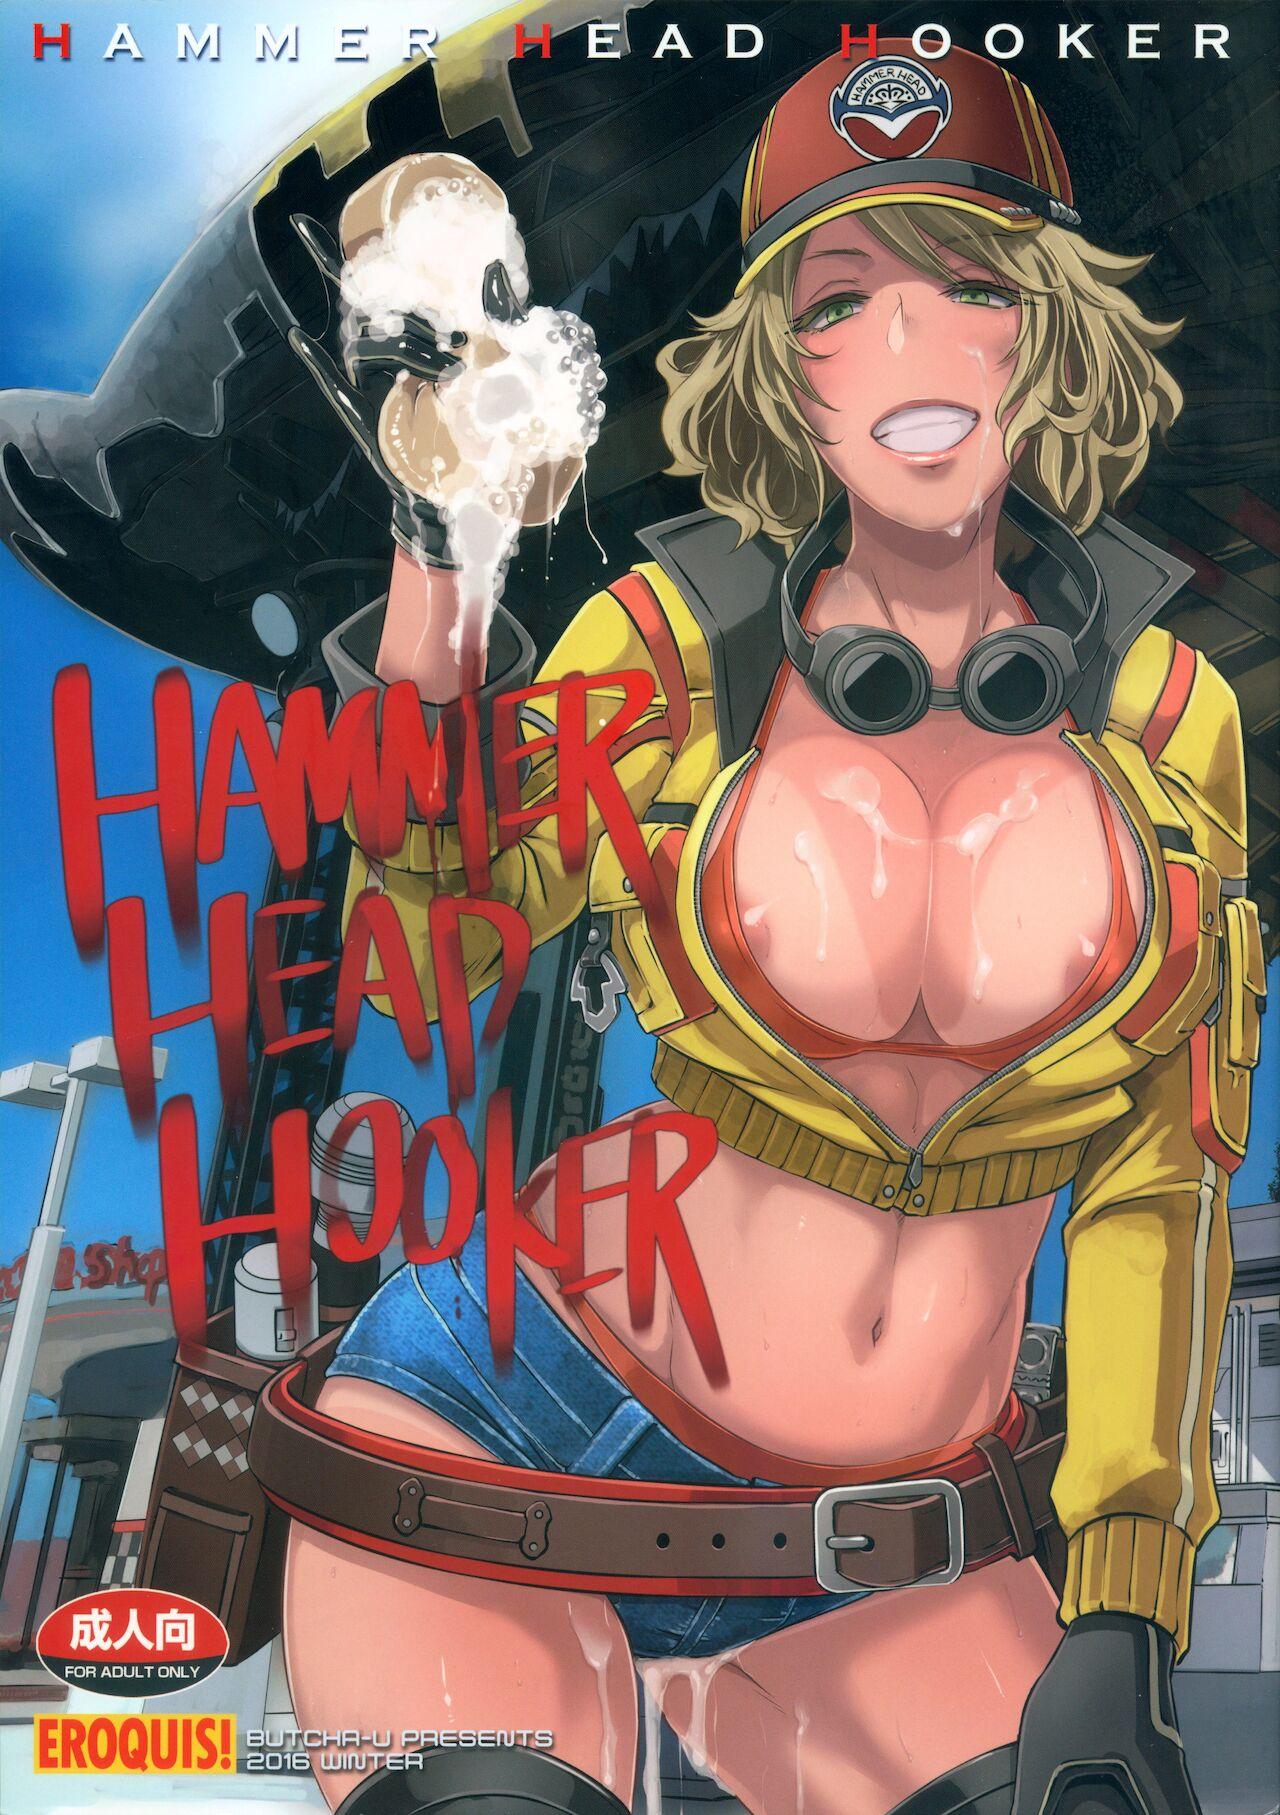 Sofa Hammer Head Hooker - Final fantasy xv Parties - Picture 1